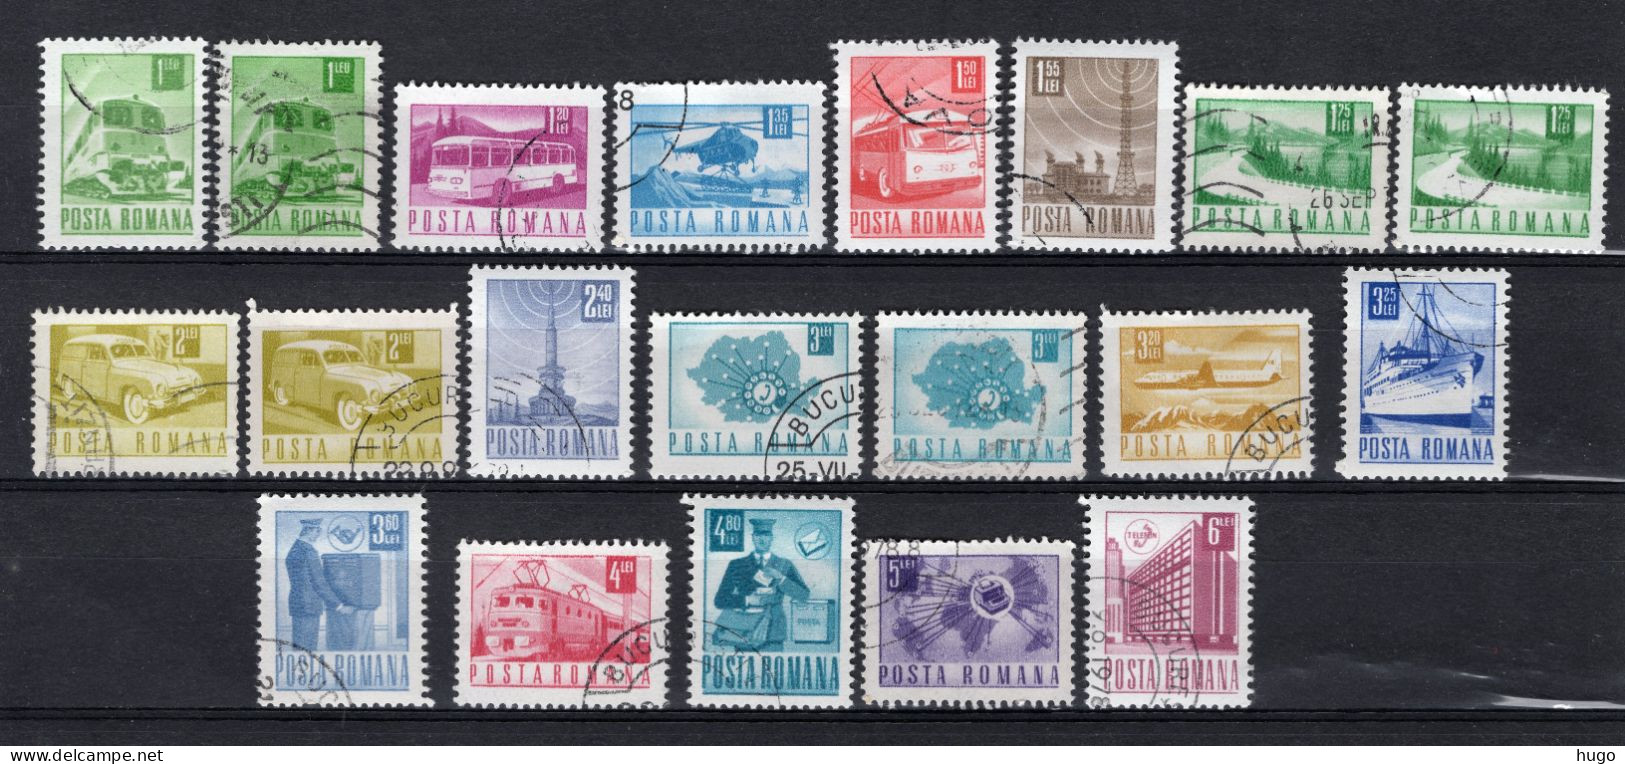 ROEMENIE Yt. 2632/2647° Gestempeld 1971 - Used Stamps